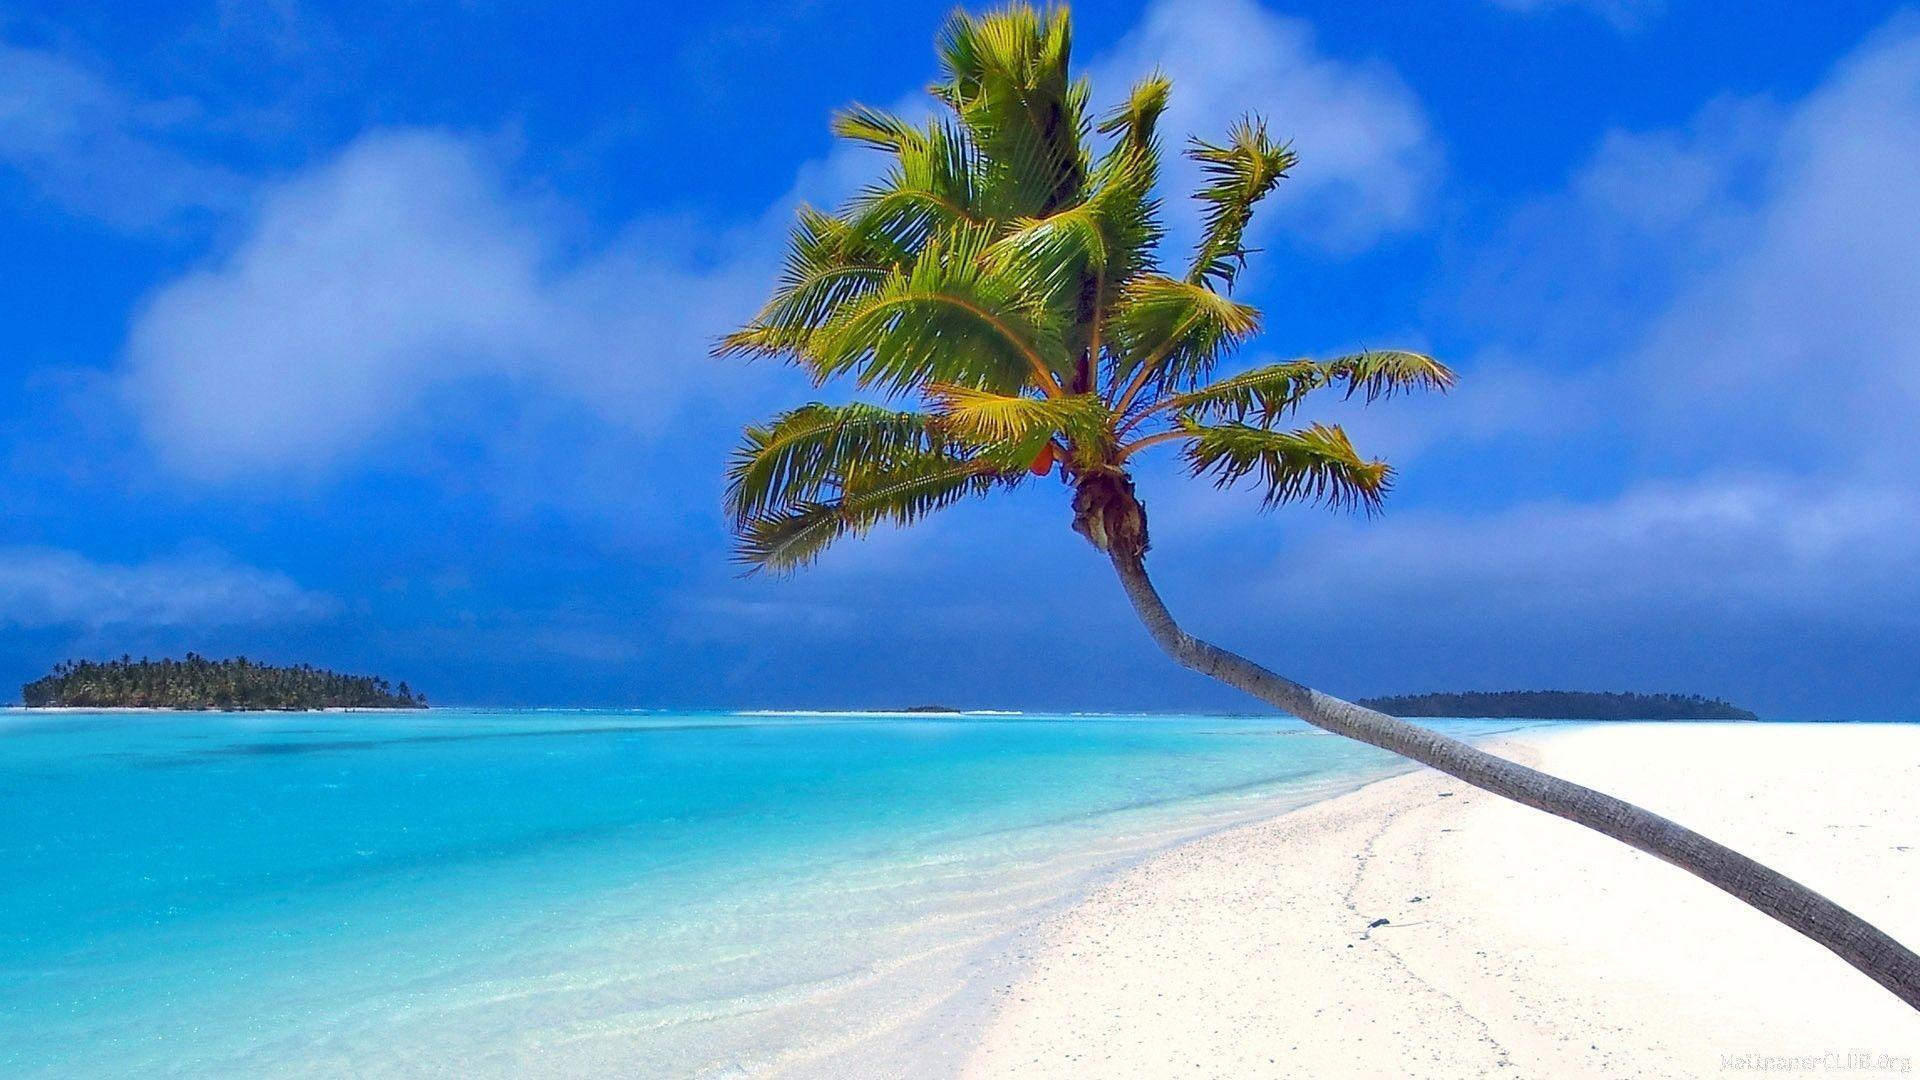 Maldives Island Beach Wallpaper Background Desktop Picture